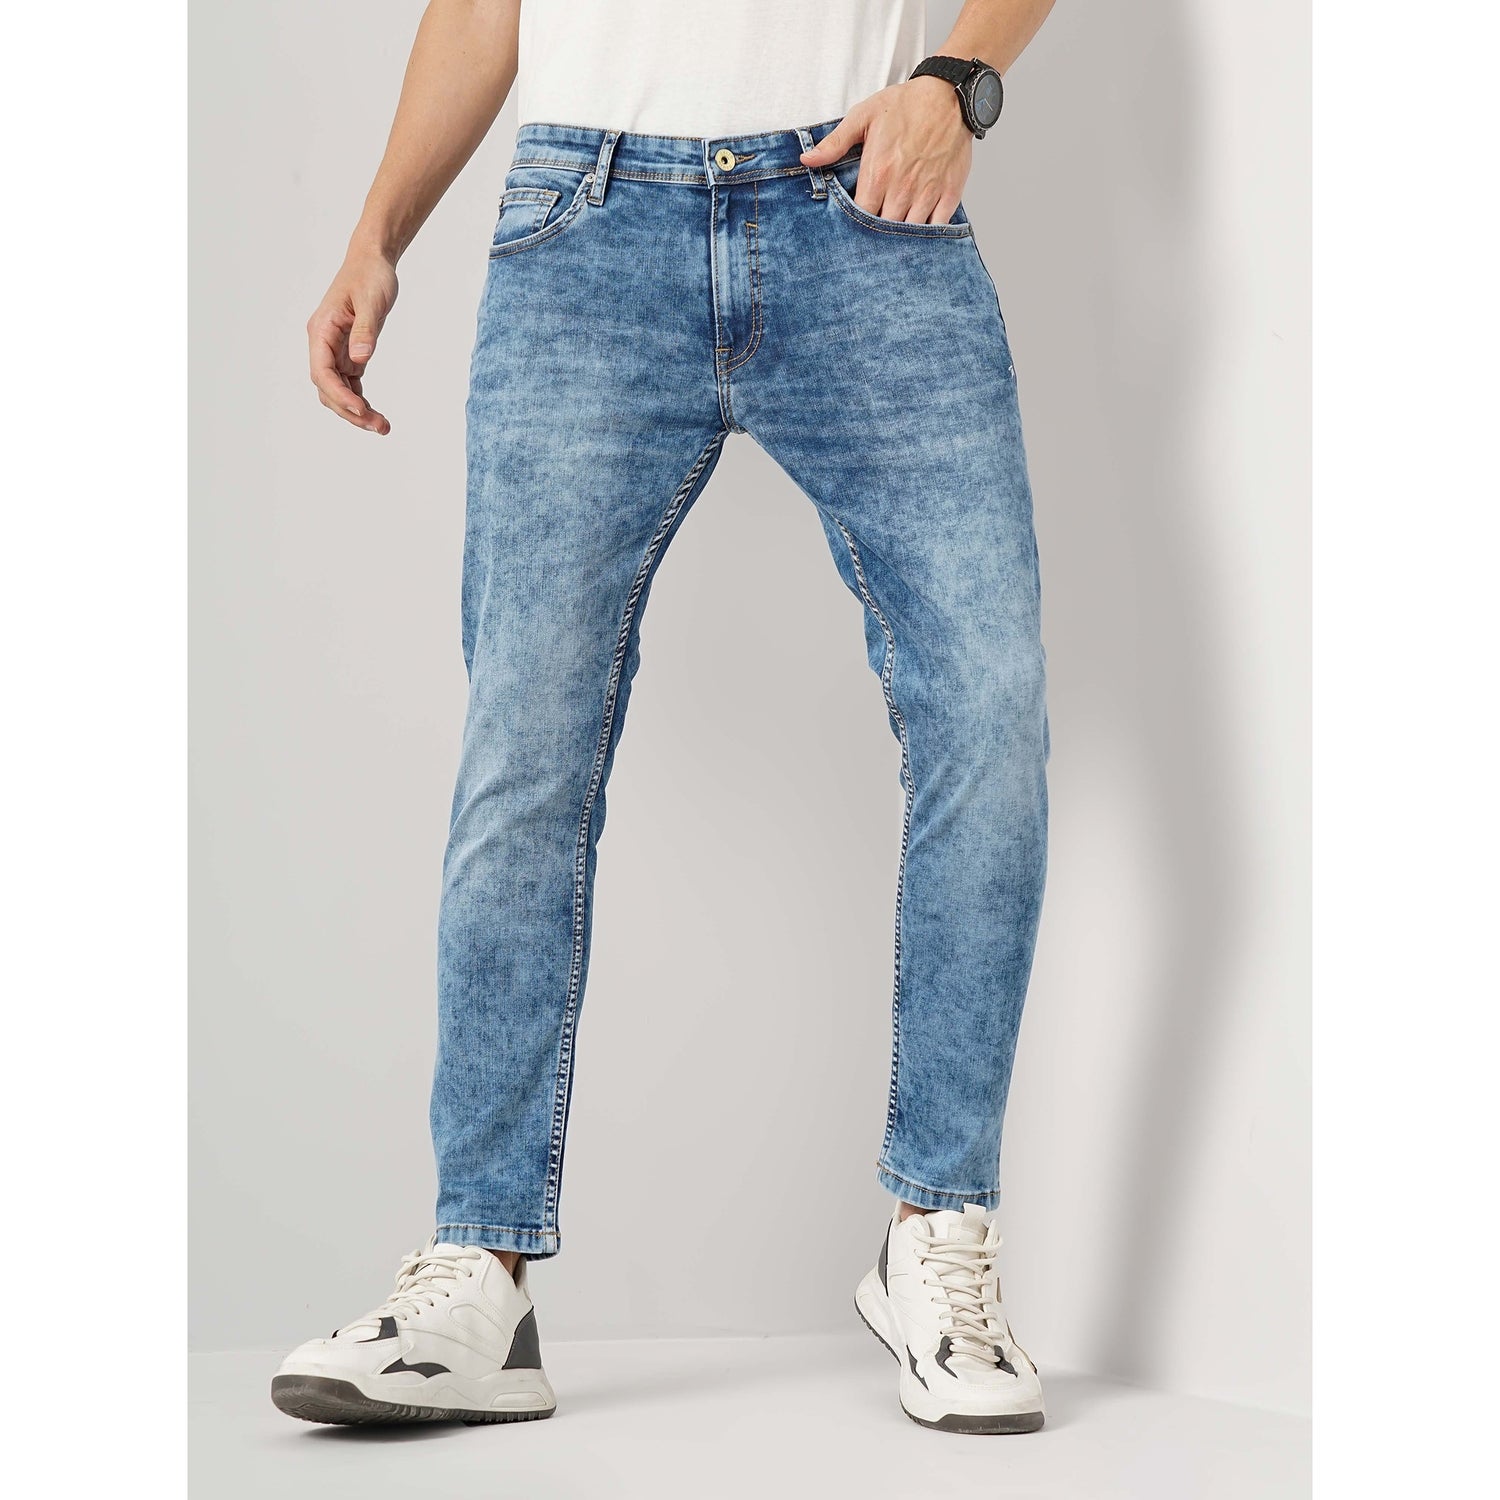 Men Blue Solid Skinny Fit Cotton Ankle Length Jeans (GOANKLE2)